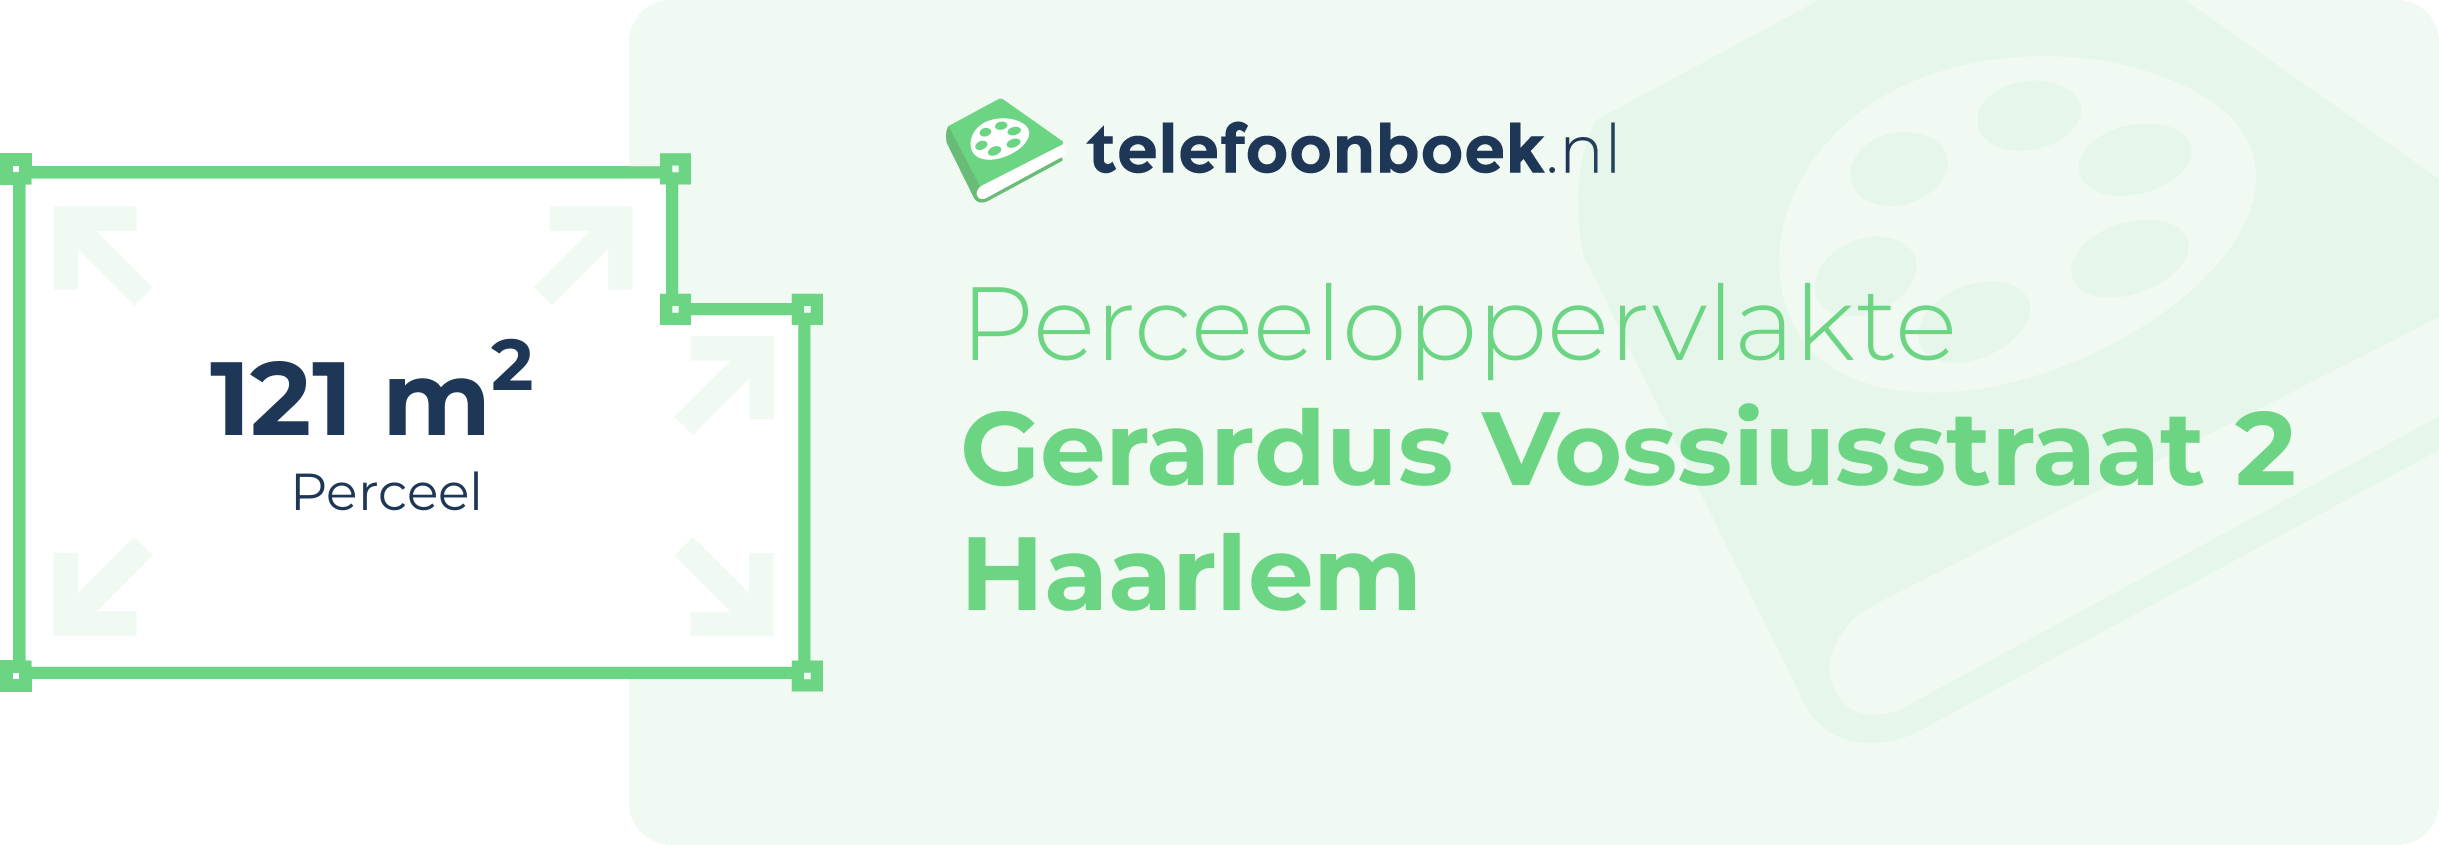 Perceeloppervlakte Gerardus Vossiusstraat 2 Haarlem